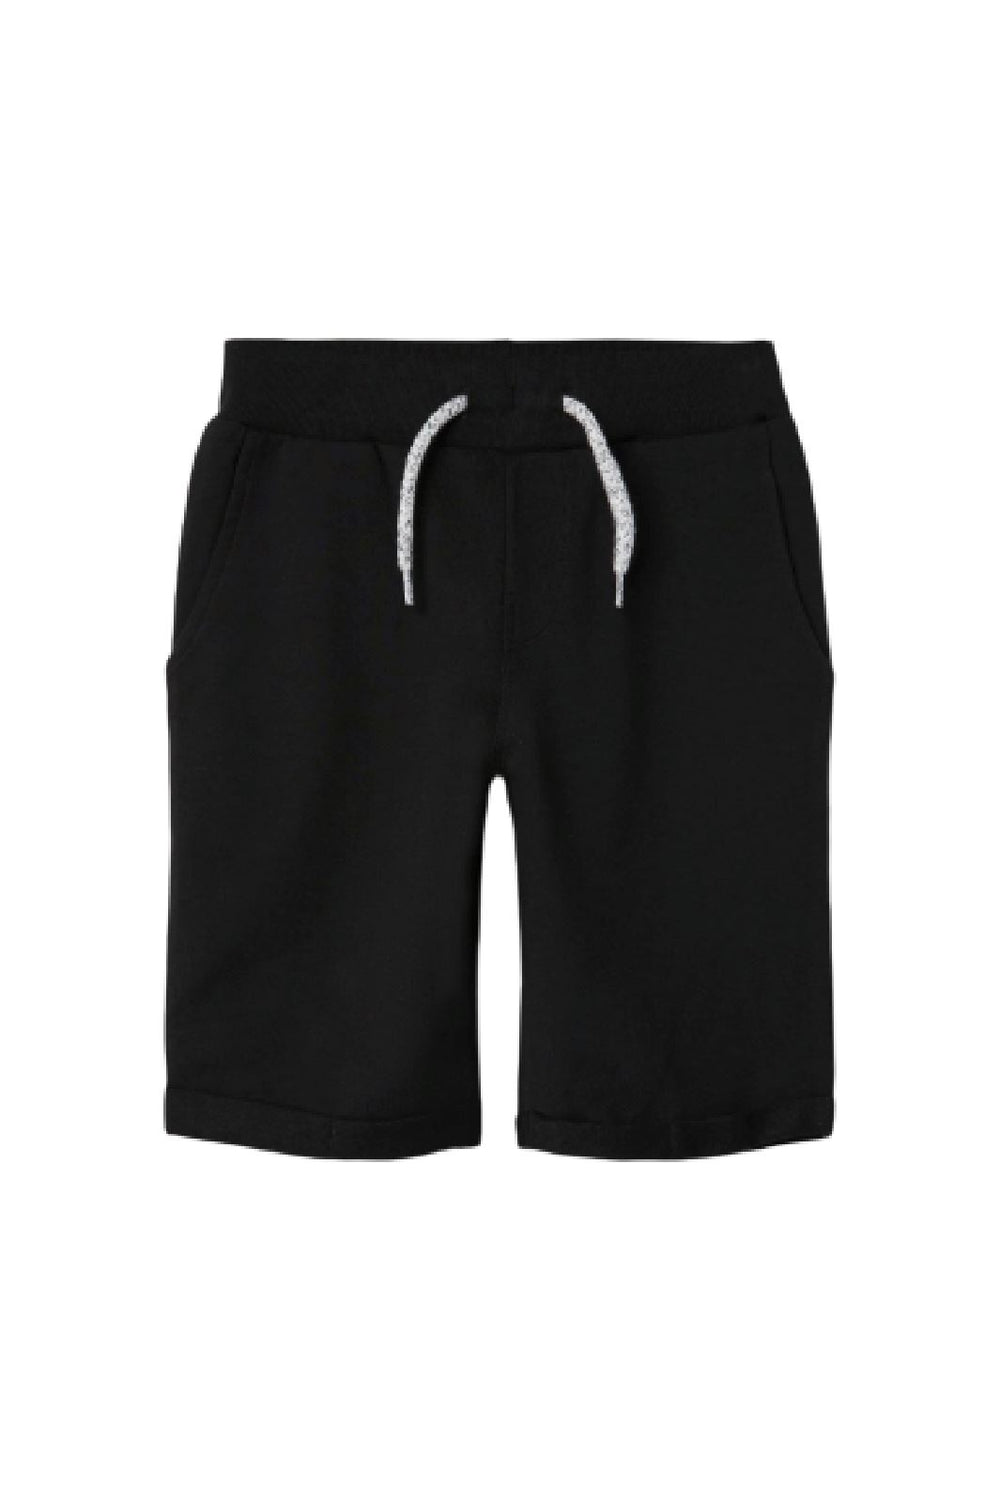 Name it - Nkmvermo Long Swe Shorts Unb F - Black Bukser 